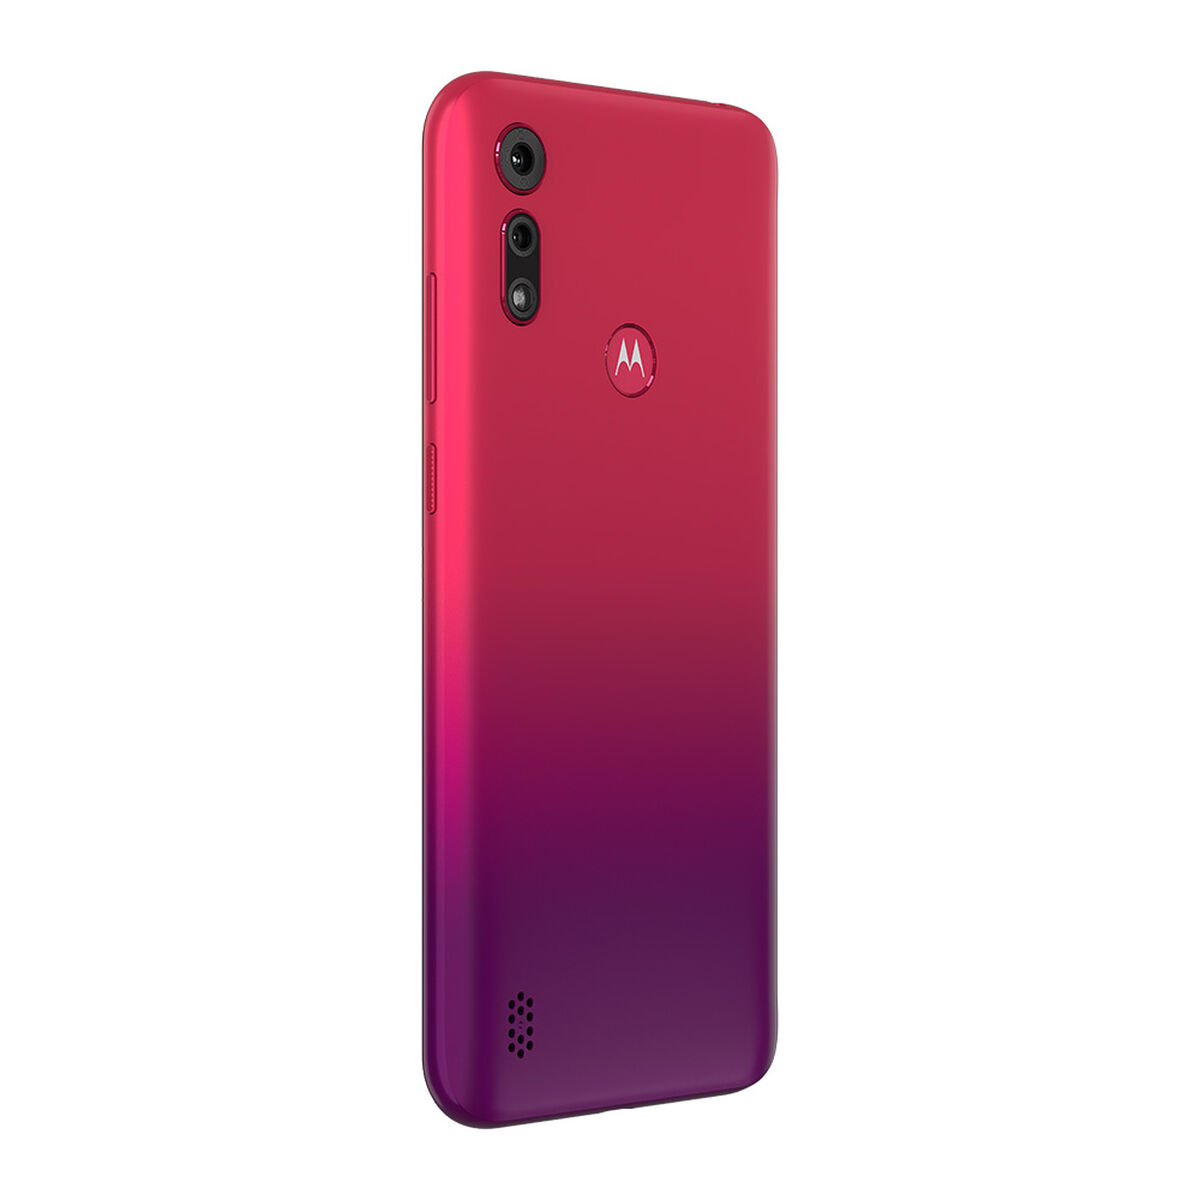 Celular Motorola E6 S 32GB 6,1" Rojo Claro